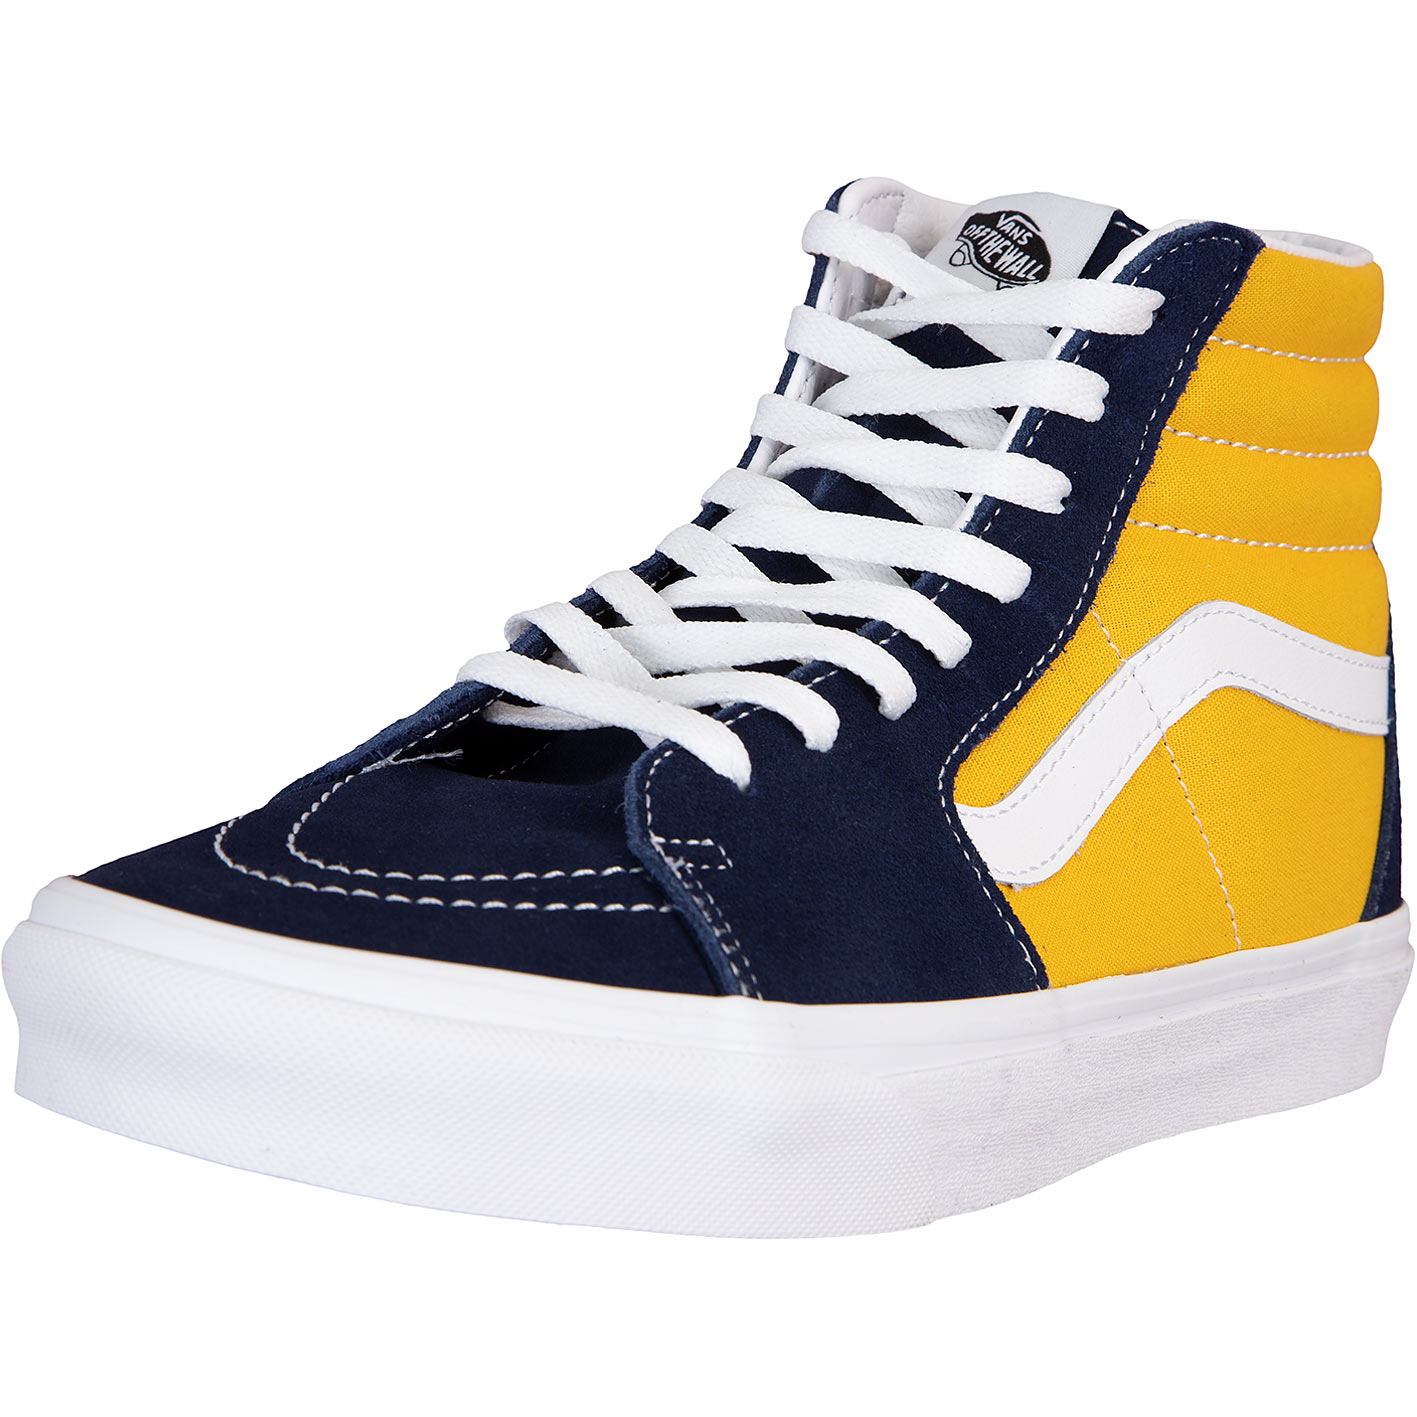 ☆ Vans Sk8-Hi Sneaker blau/gelb - hier bestellen!